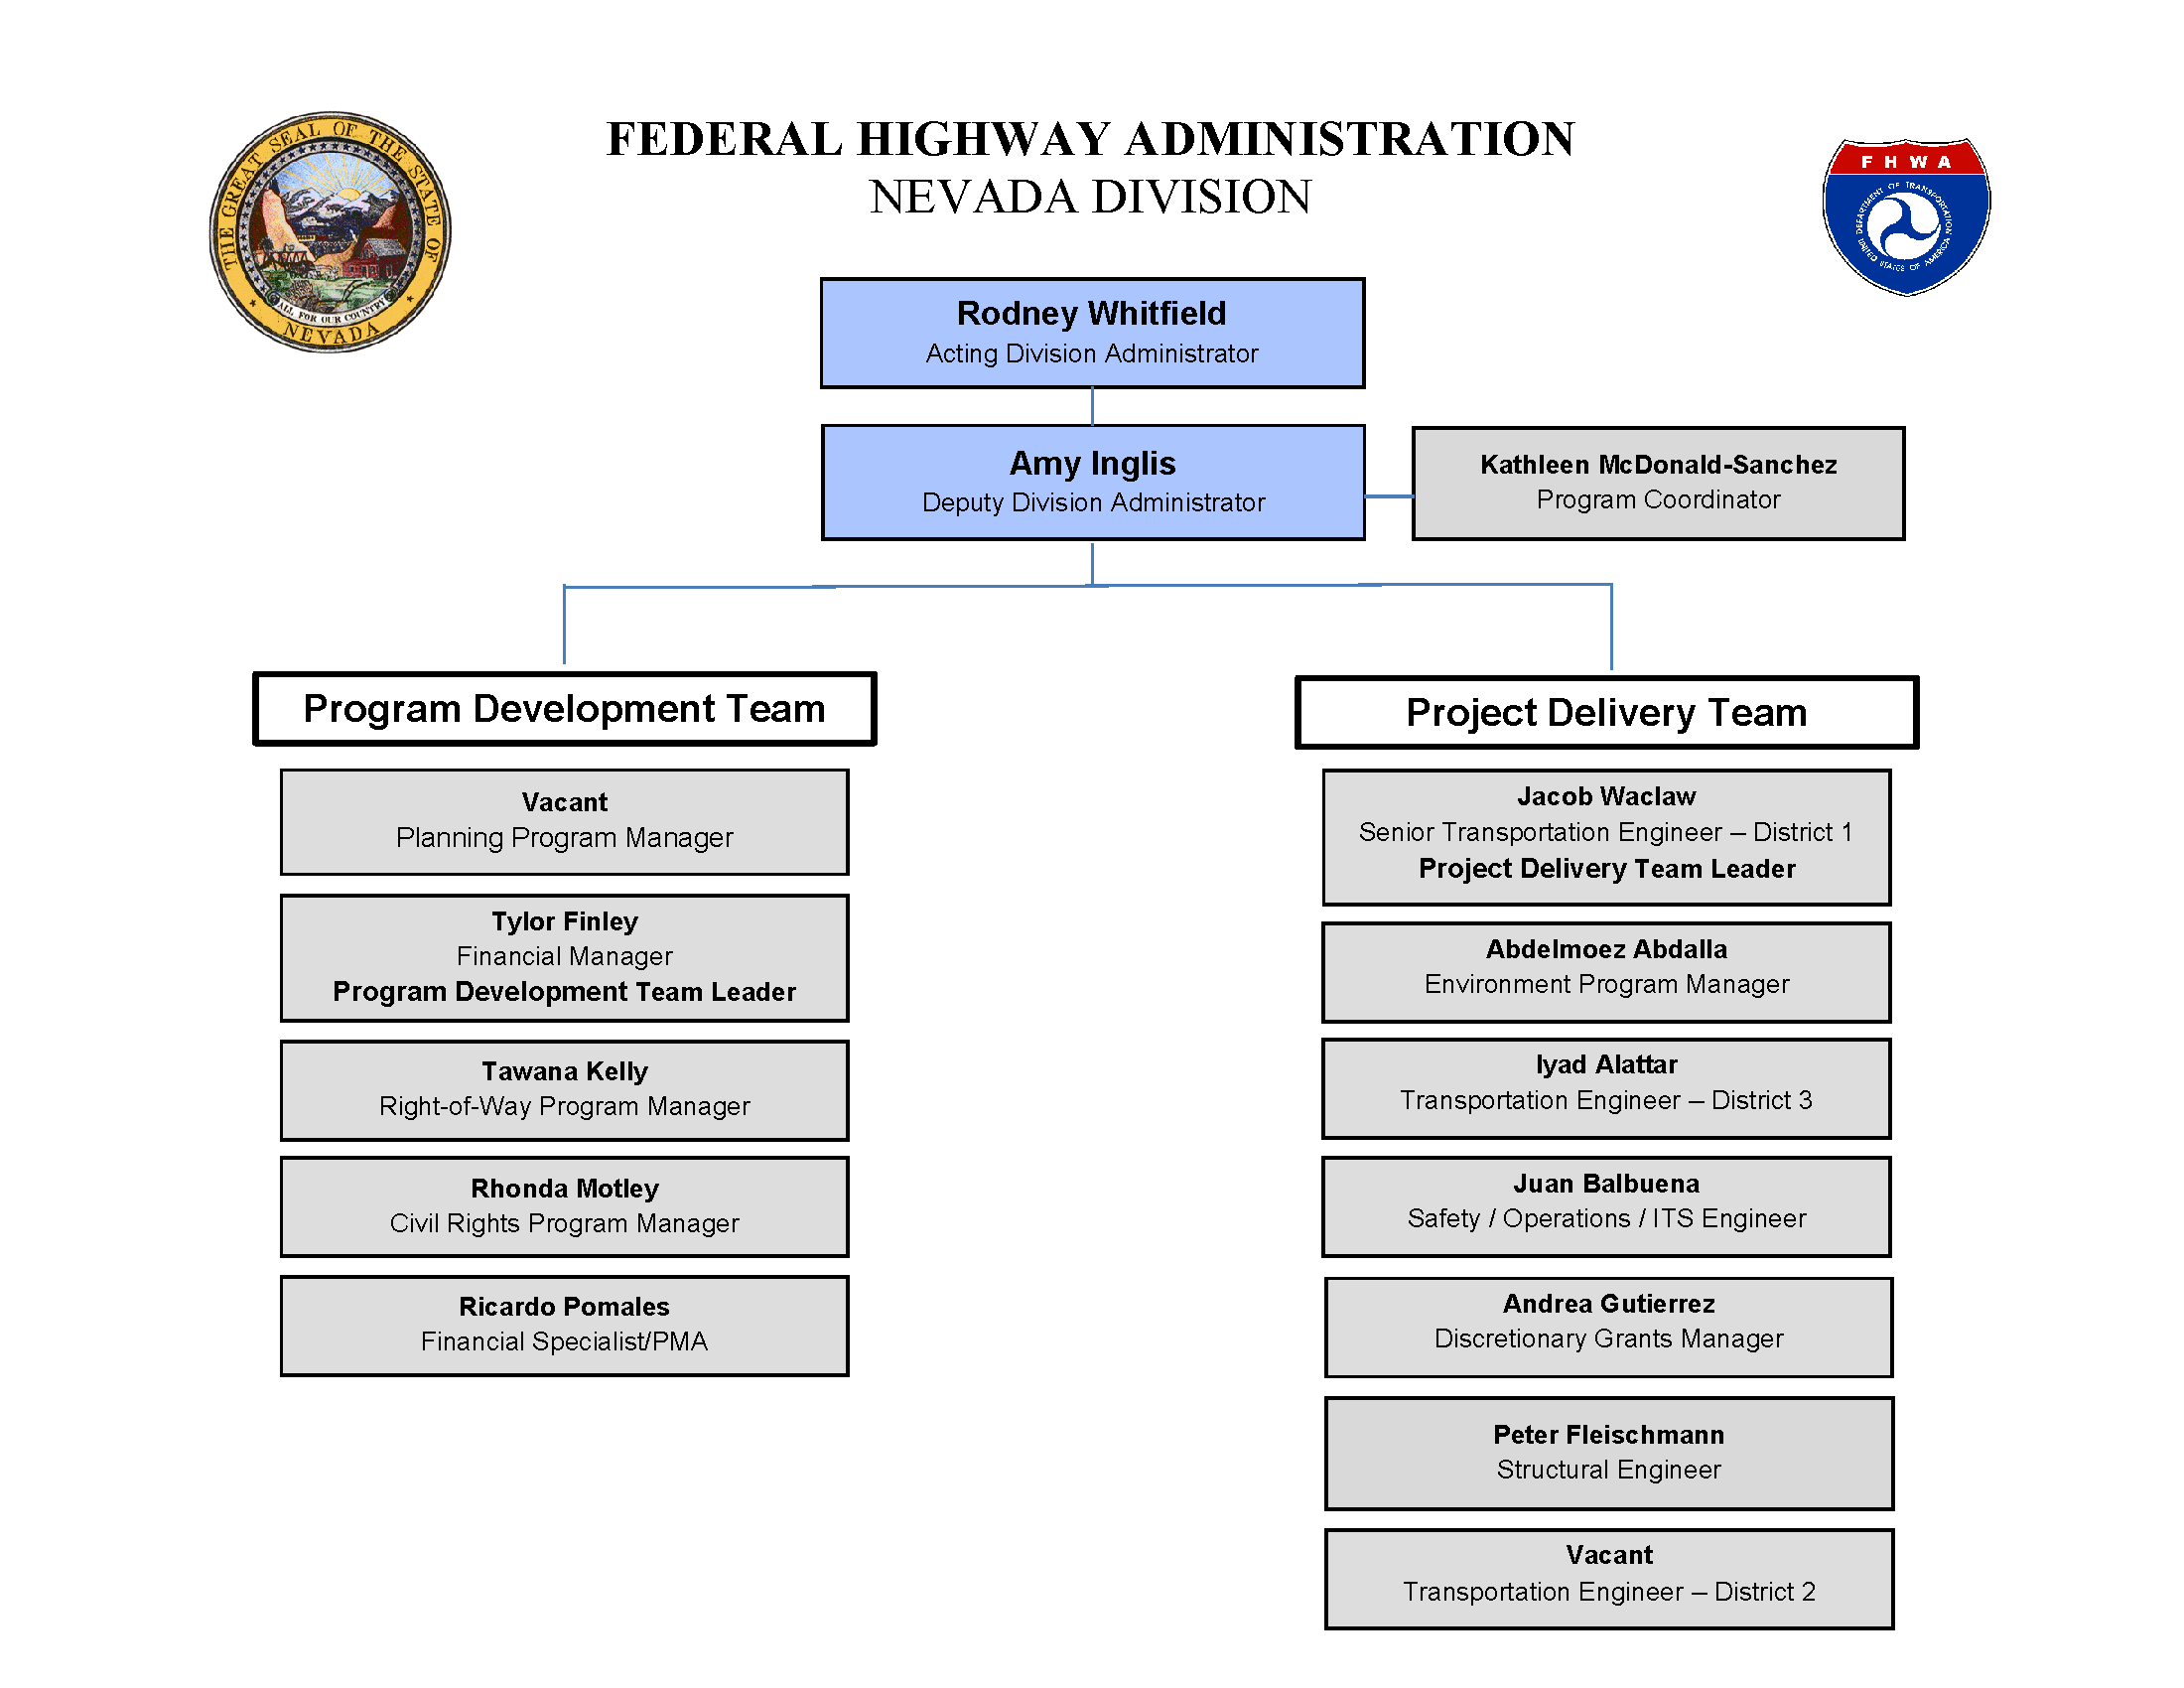 FHWA Nevada Division Organizational Chart